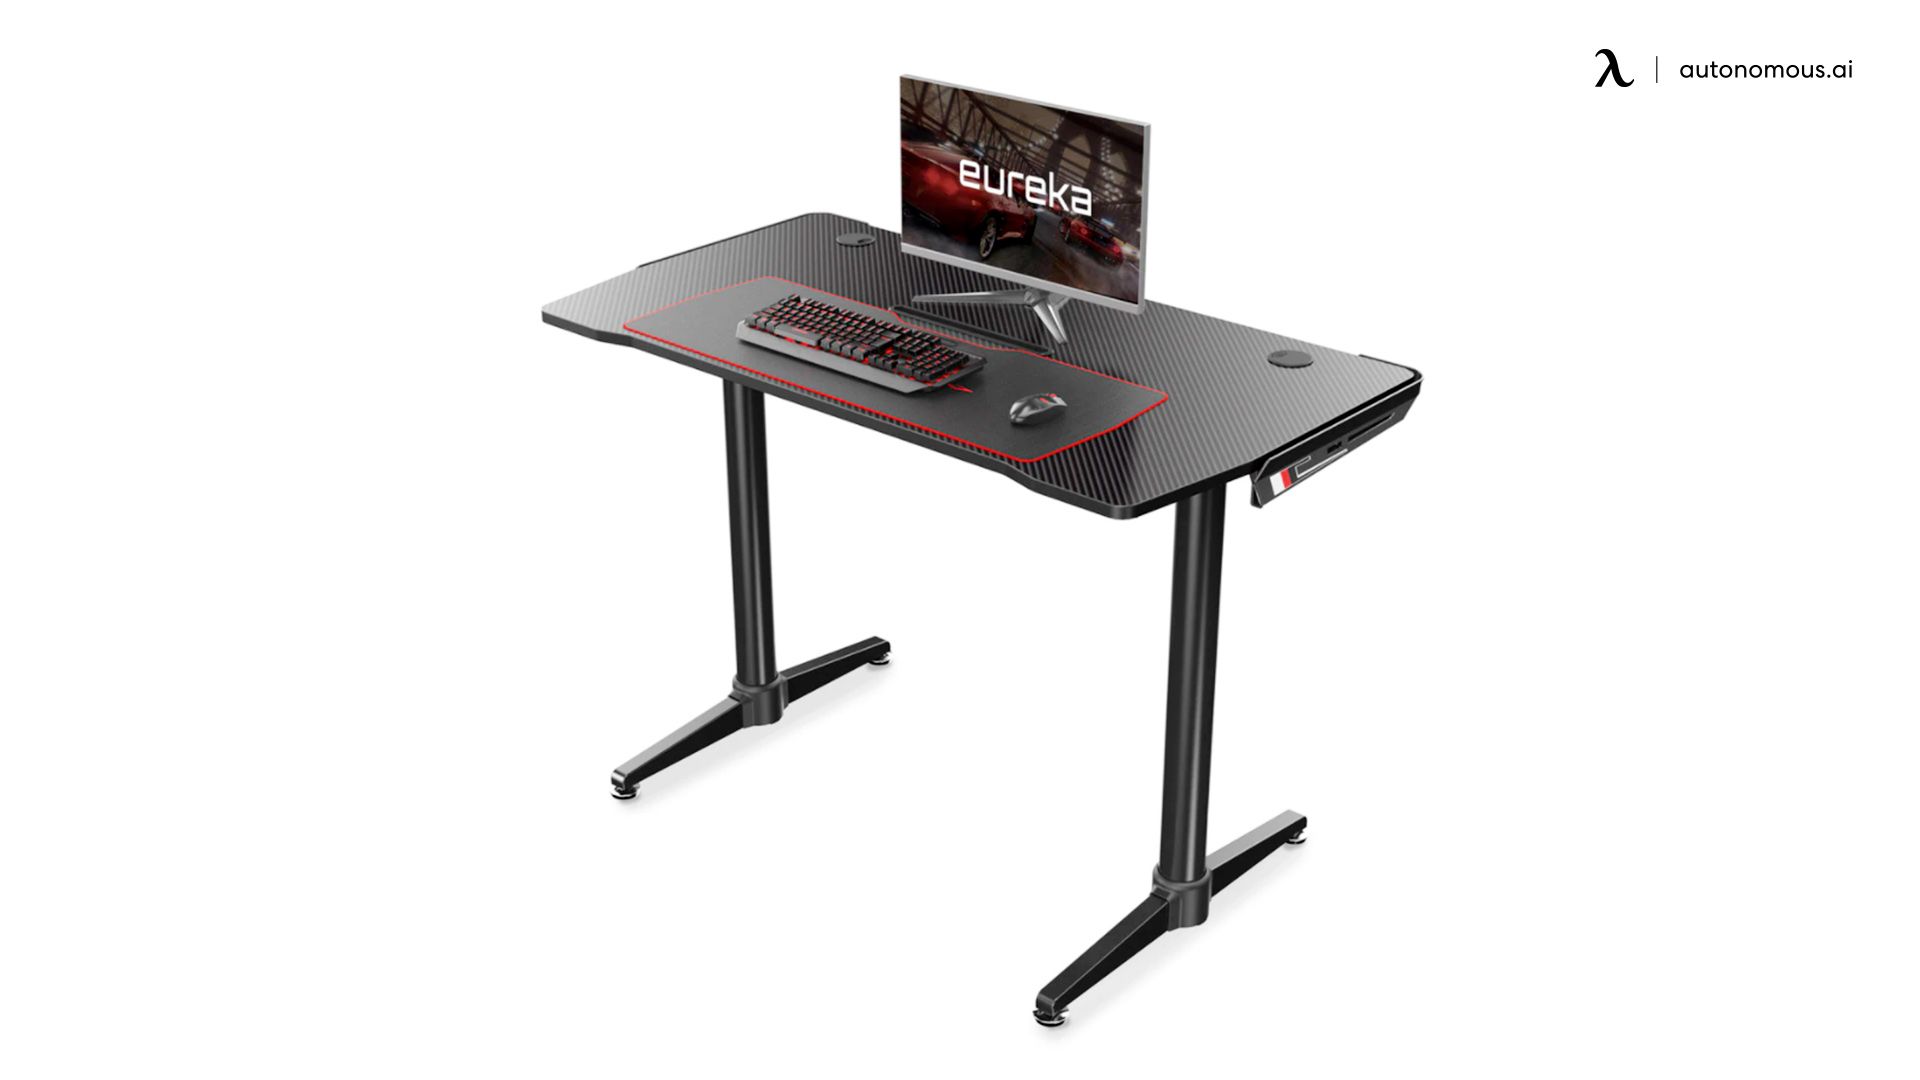 Eureka i1 Standing Desk